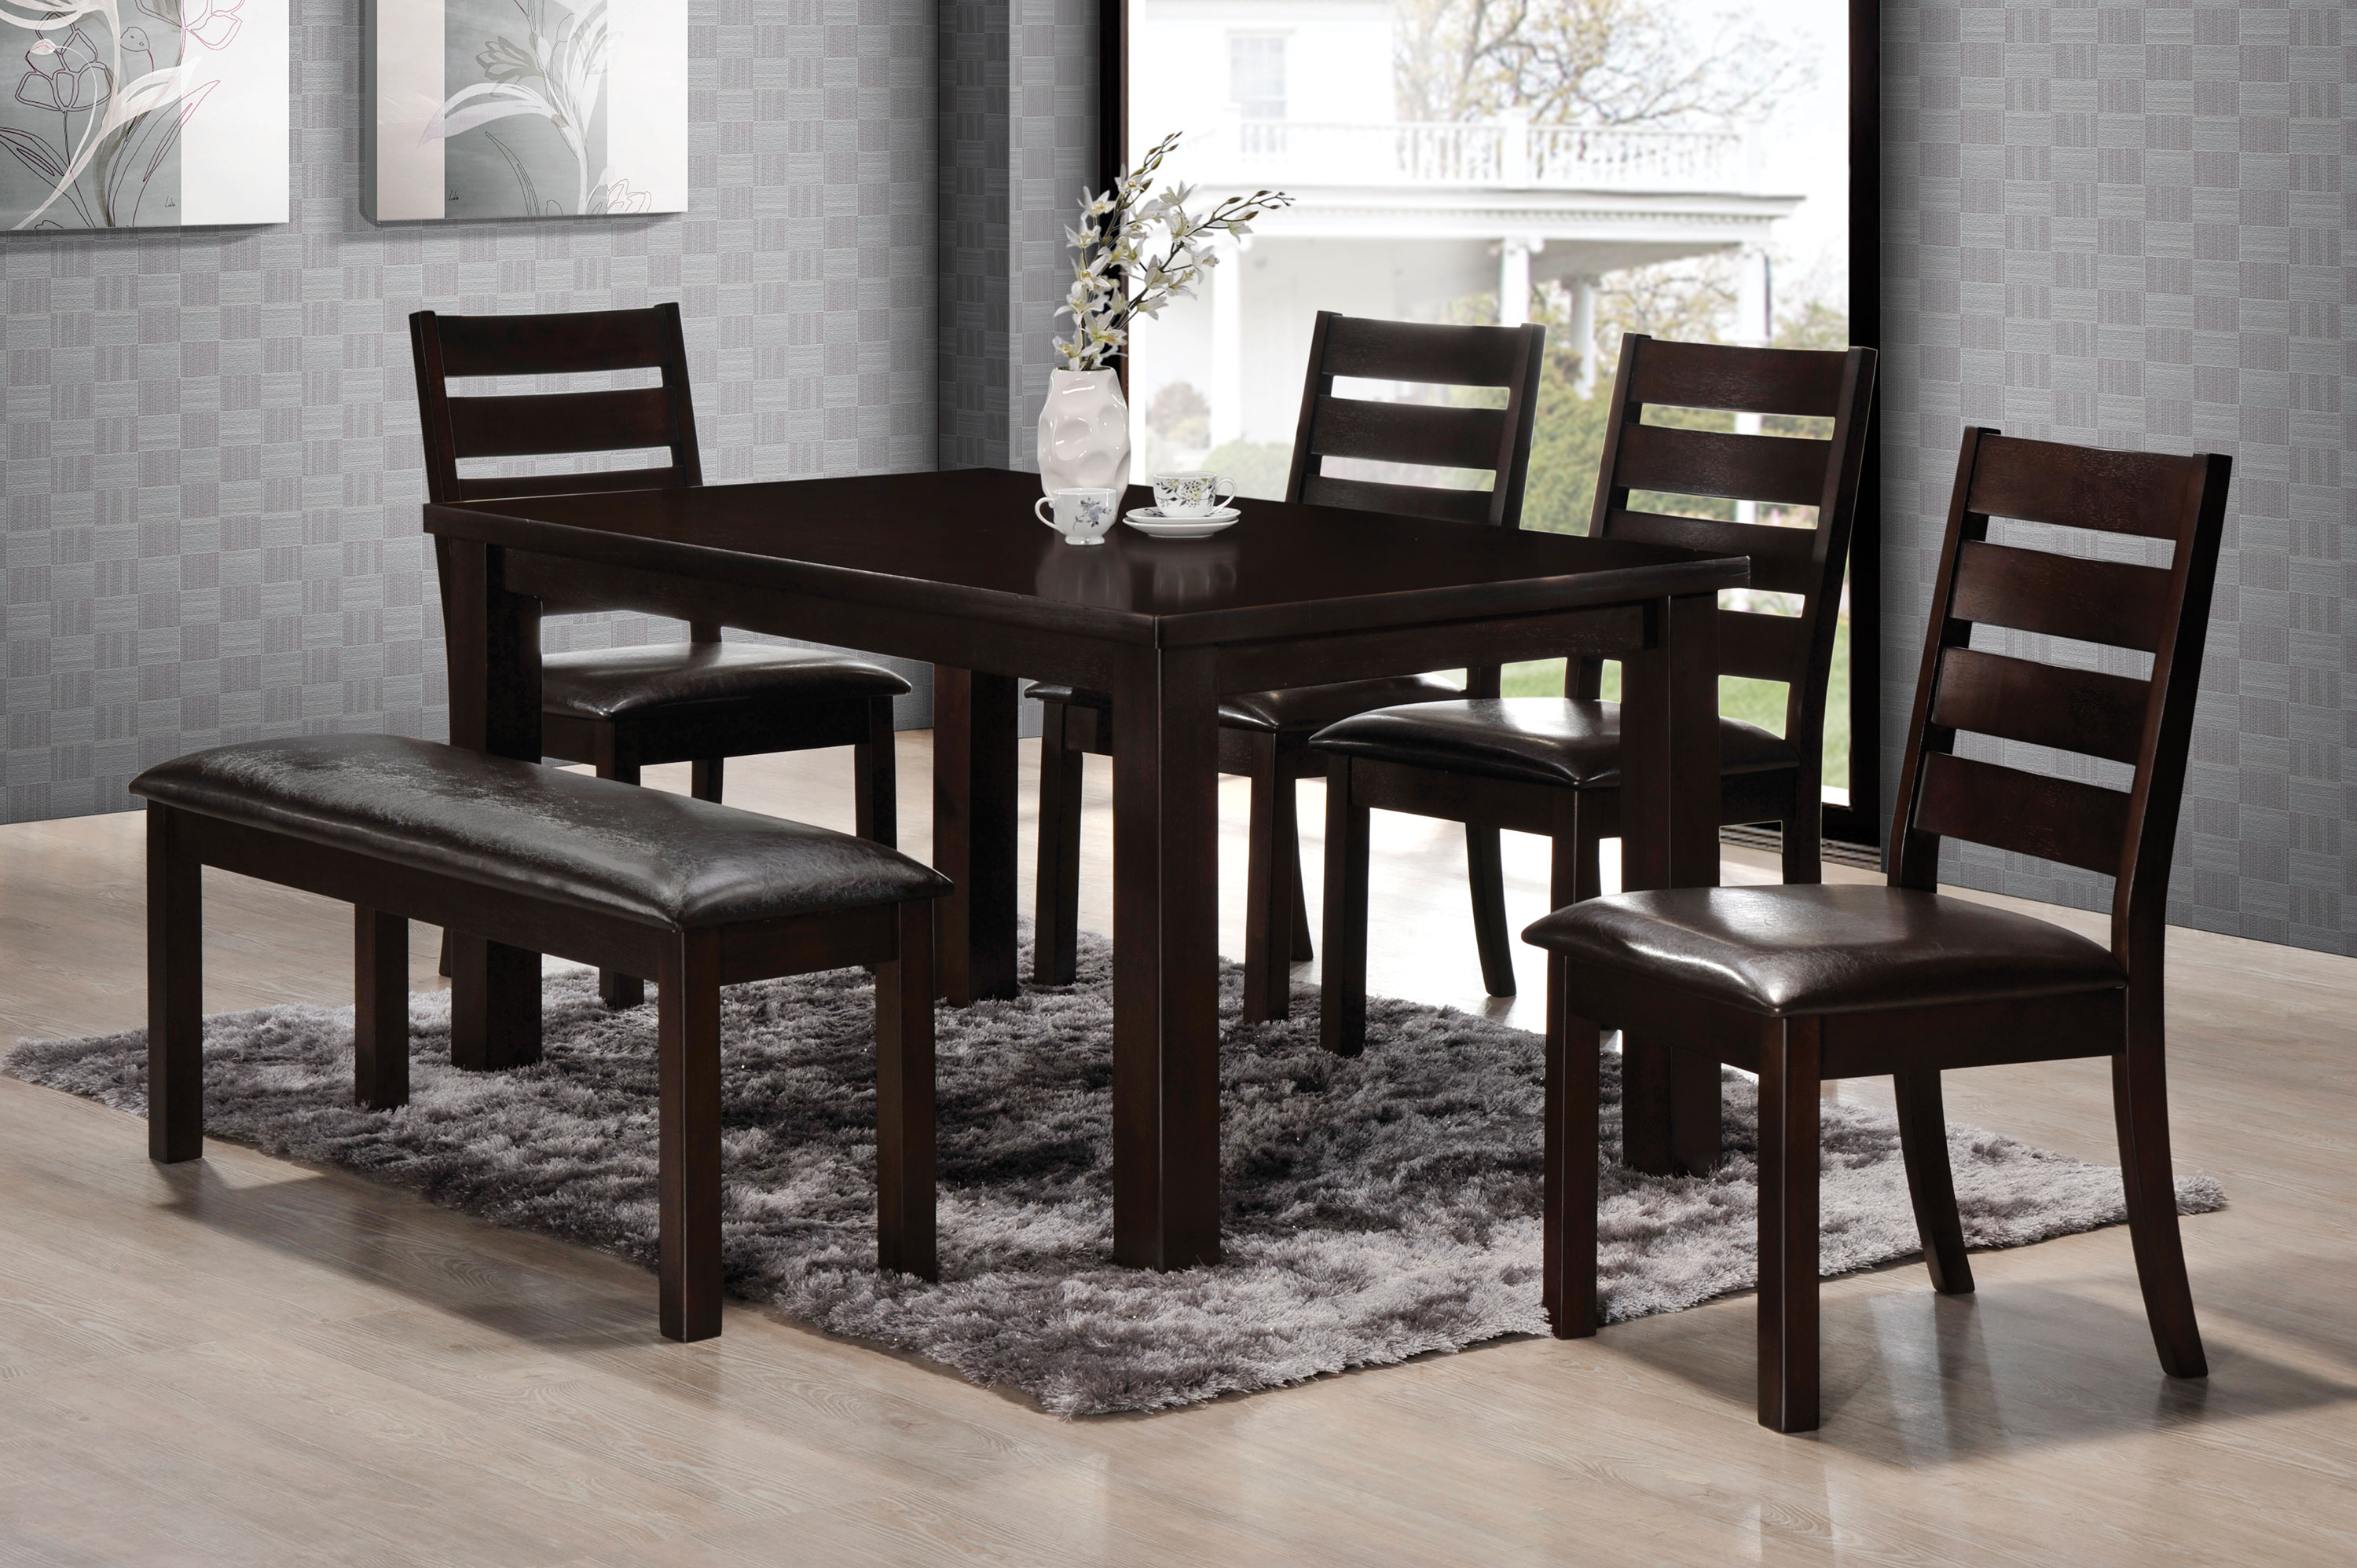 levin furniture kitchen table set